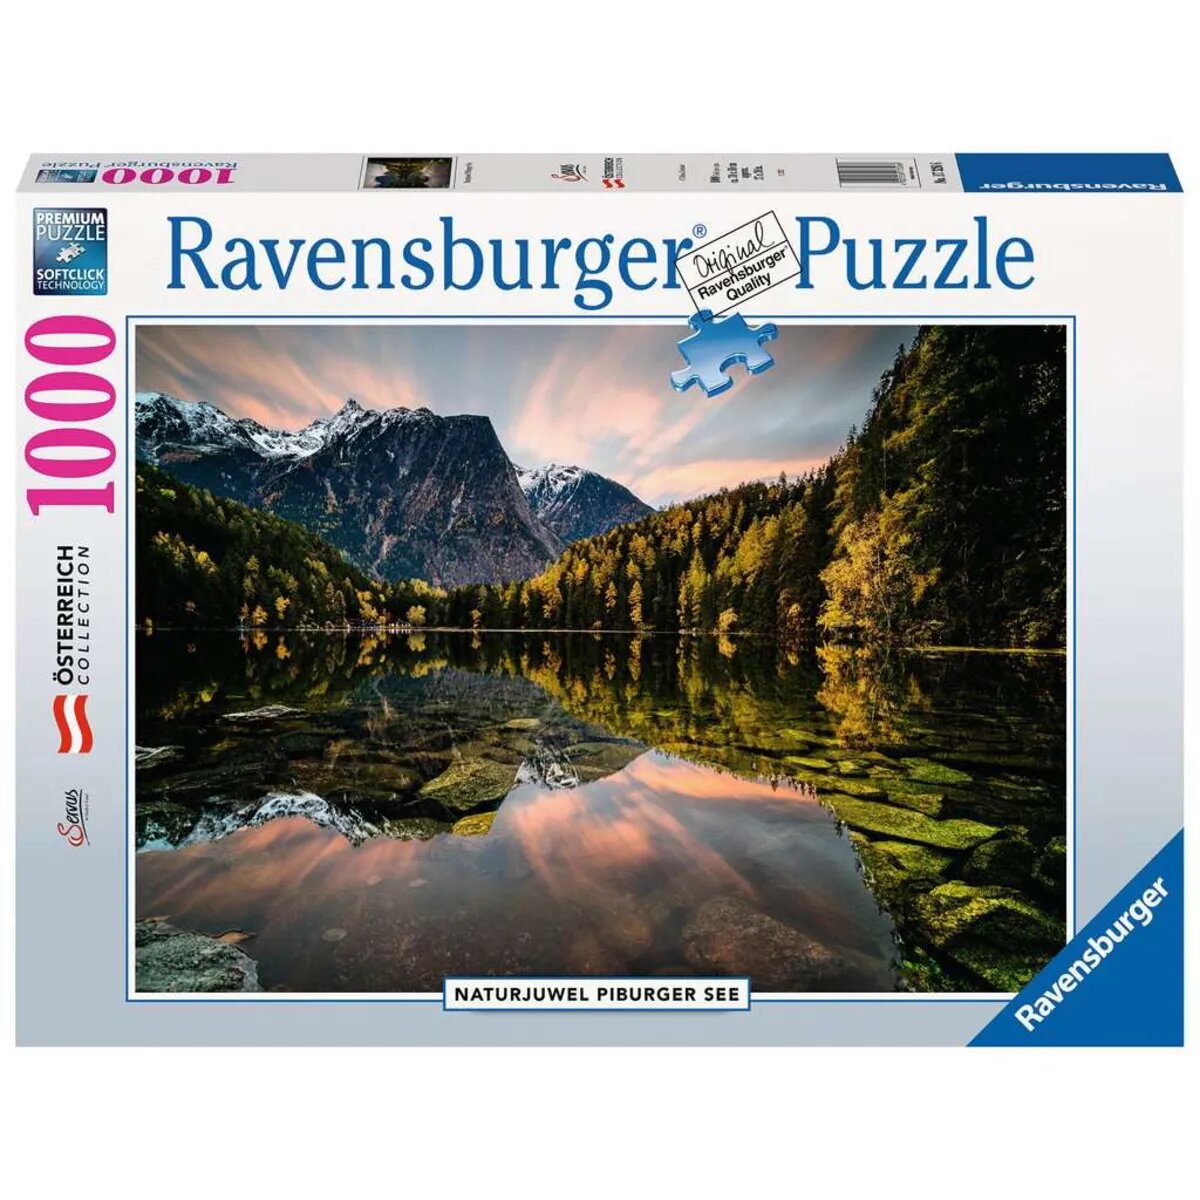 Ravensburger Puzzle - Naturjuwel Piburger See, 1000 Teile